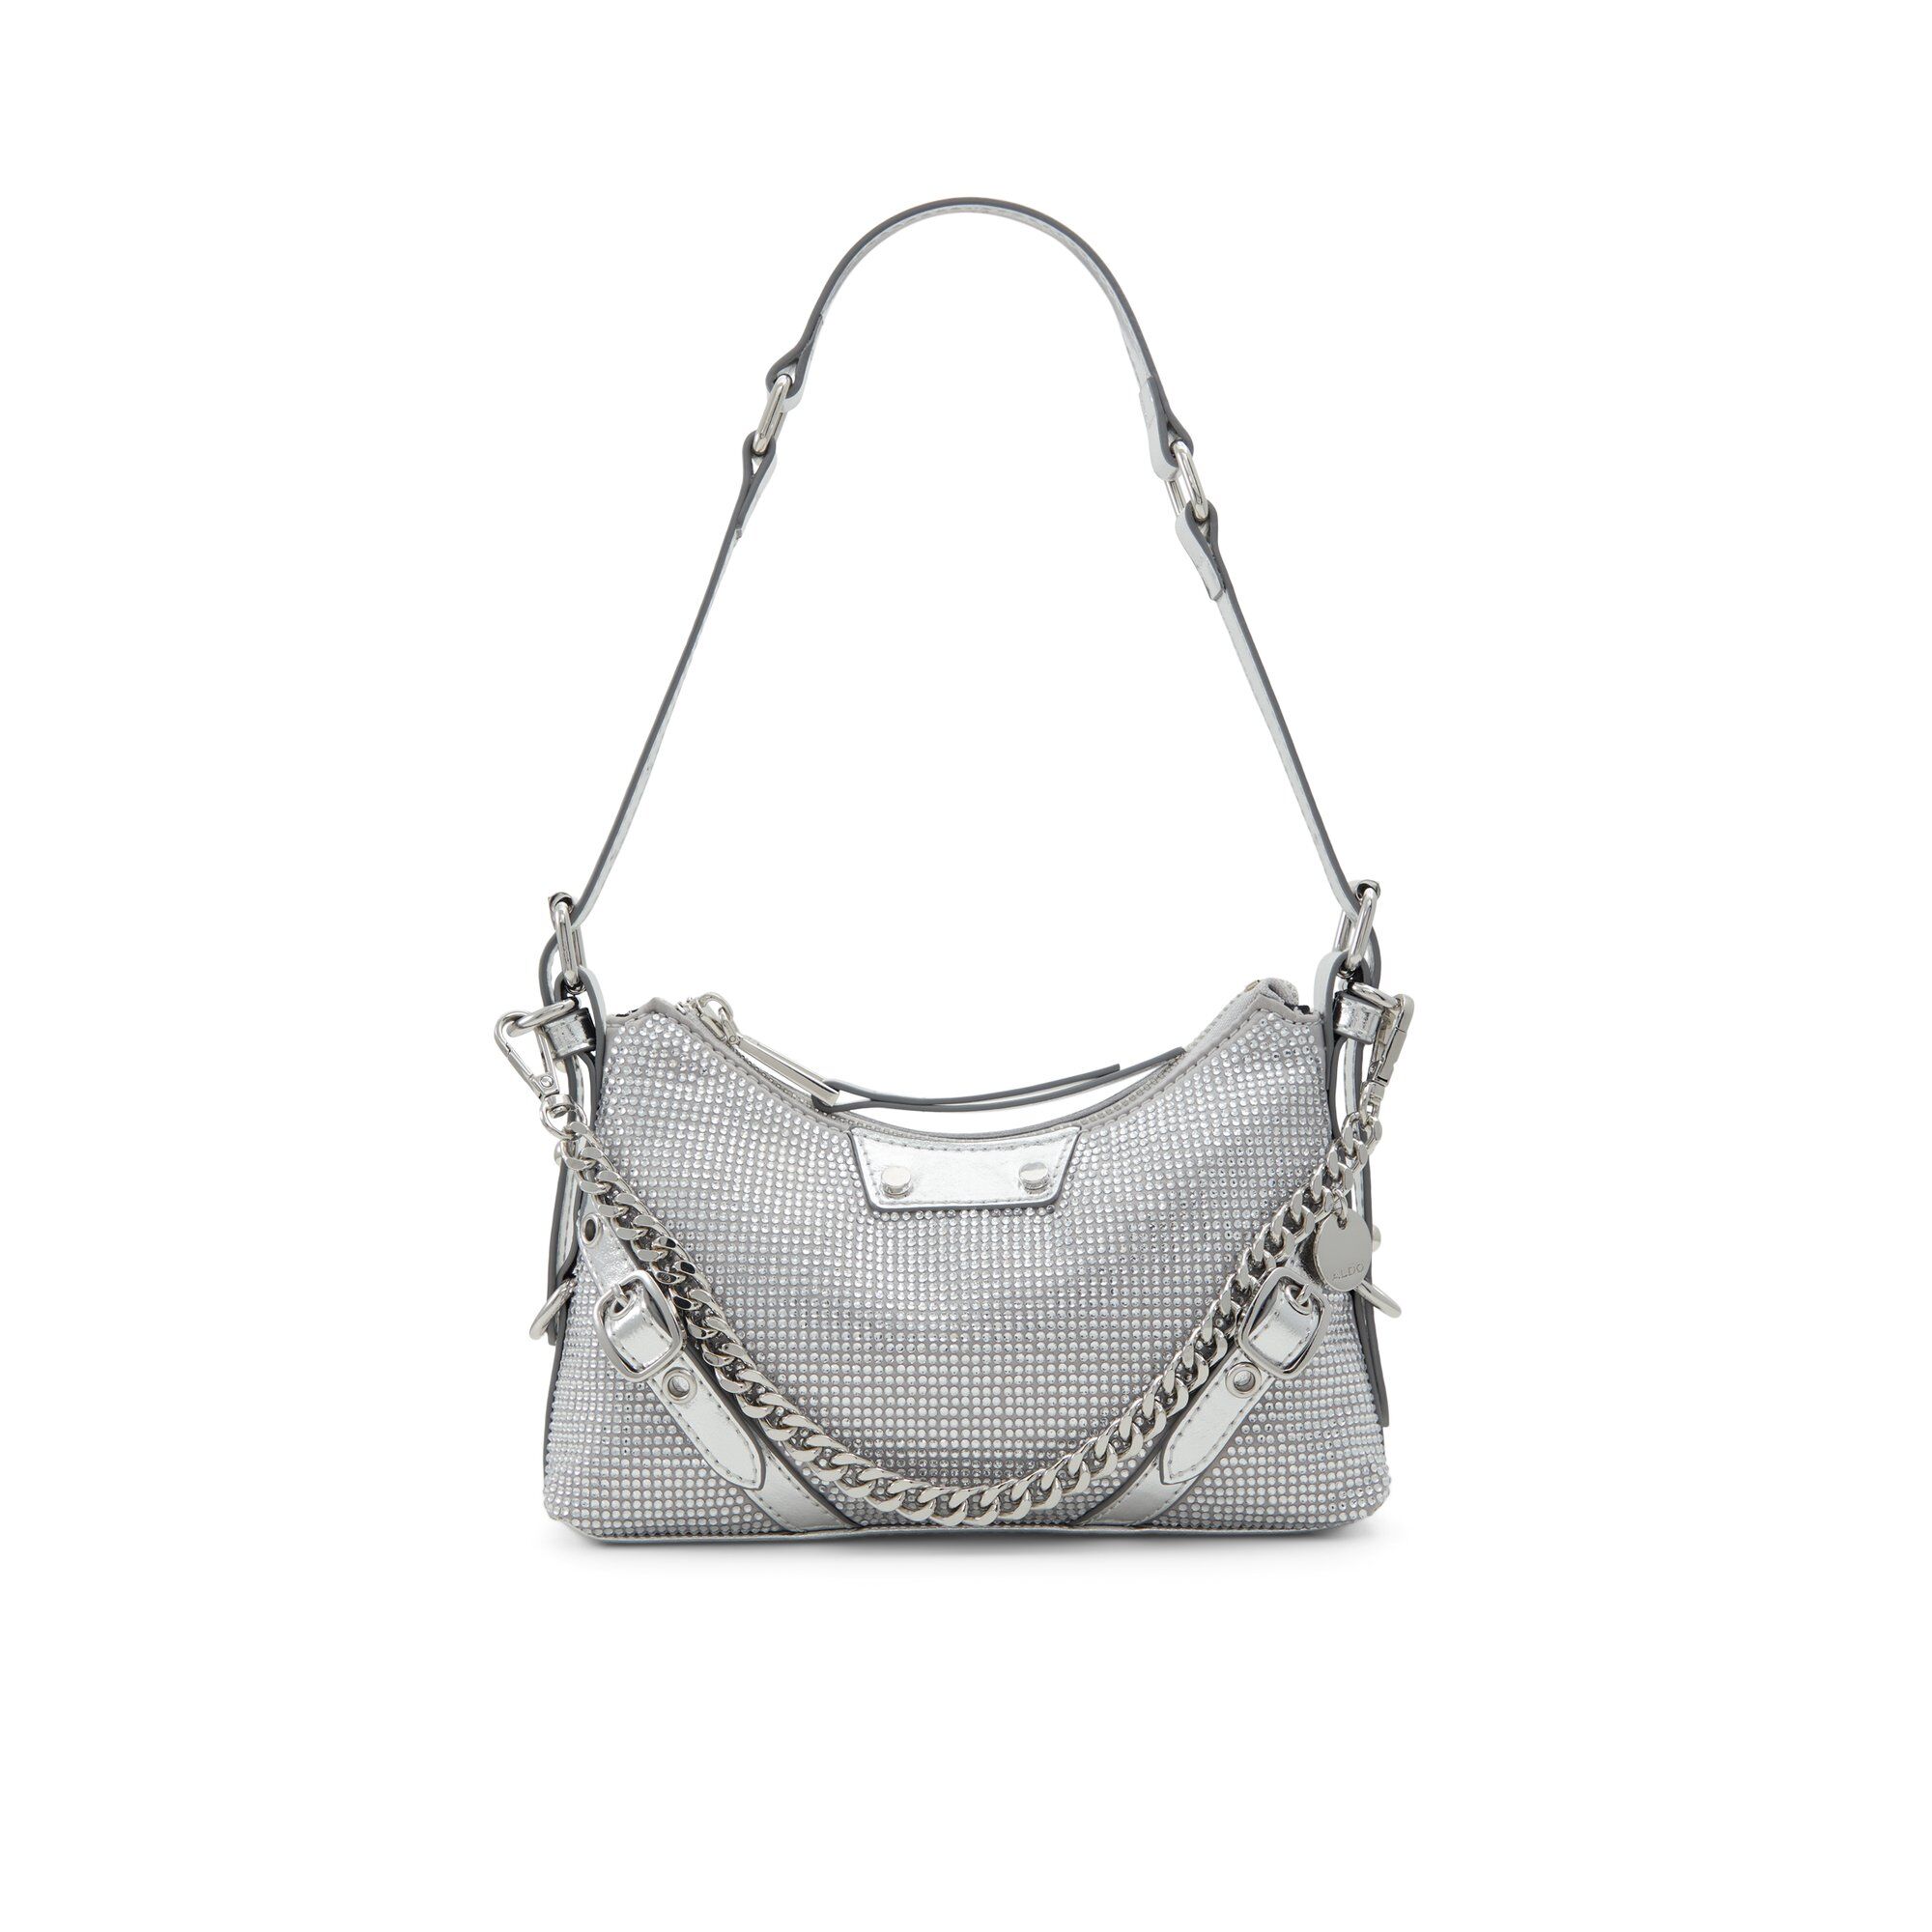 ALDO Farelix - Women's Shoulder Bag Handbag - Silver